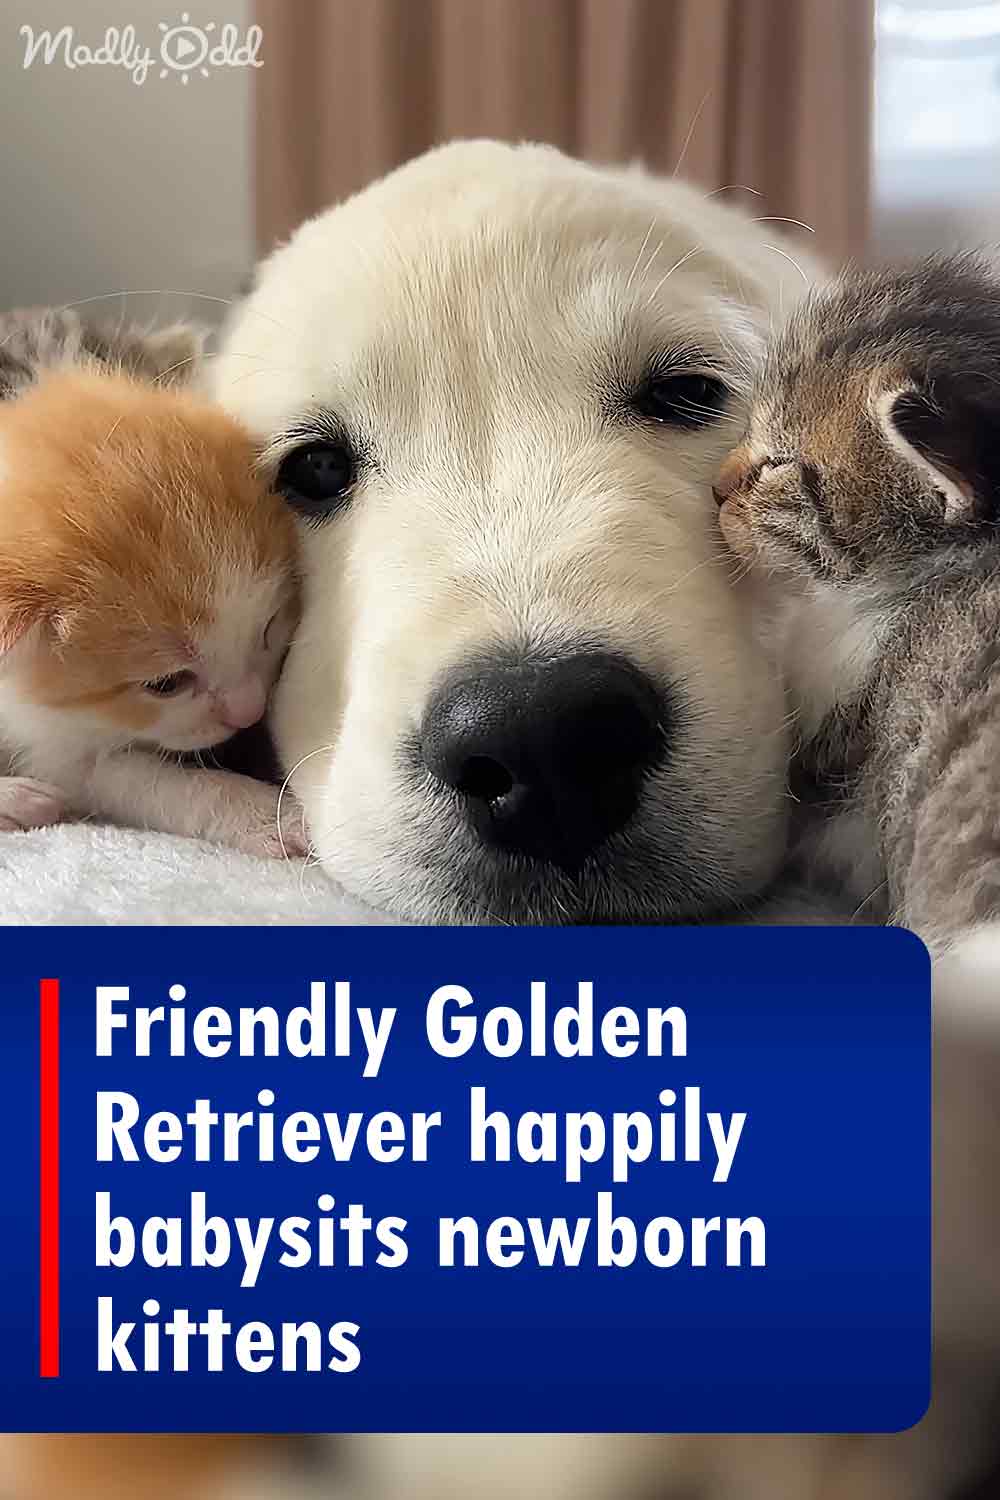 Friendly Golden Retriever happily babysits newborn kittens